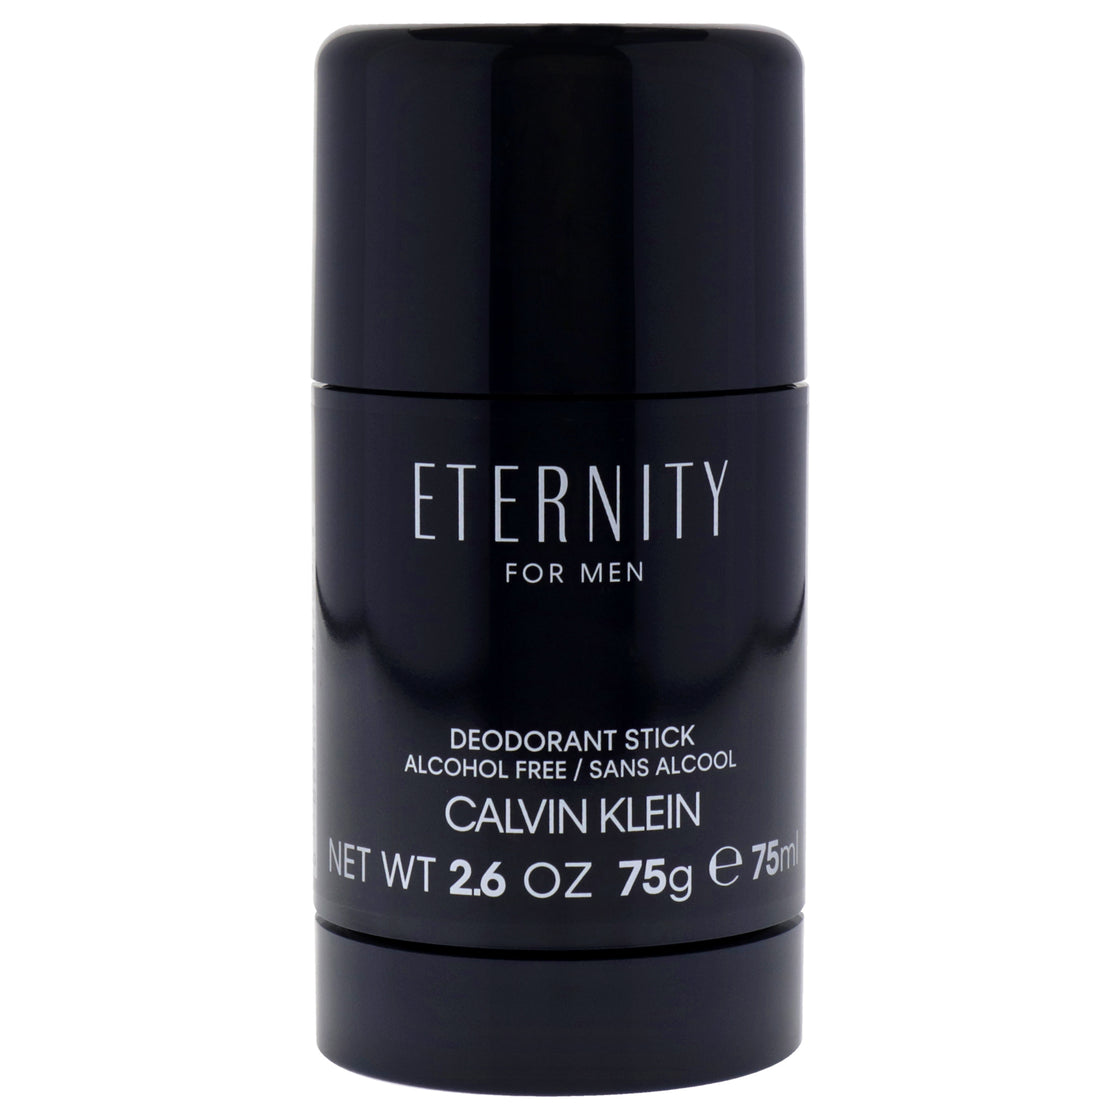 Eternity by Calvin Klein for Men - 2.6 oz Deodorant Stick